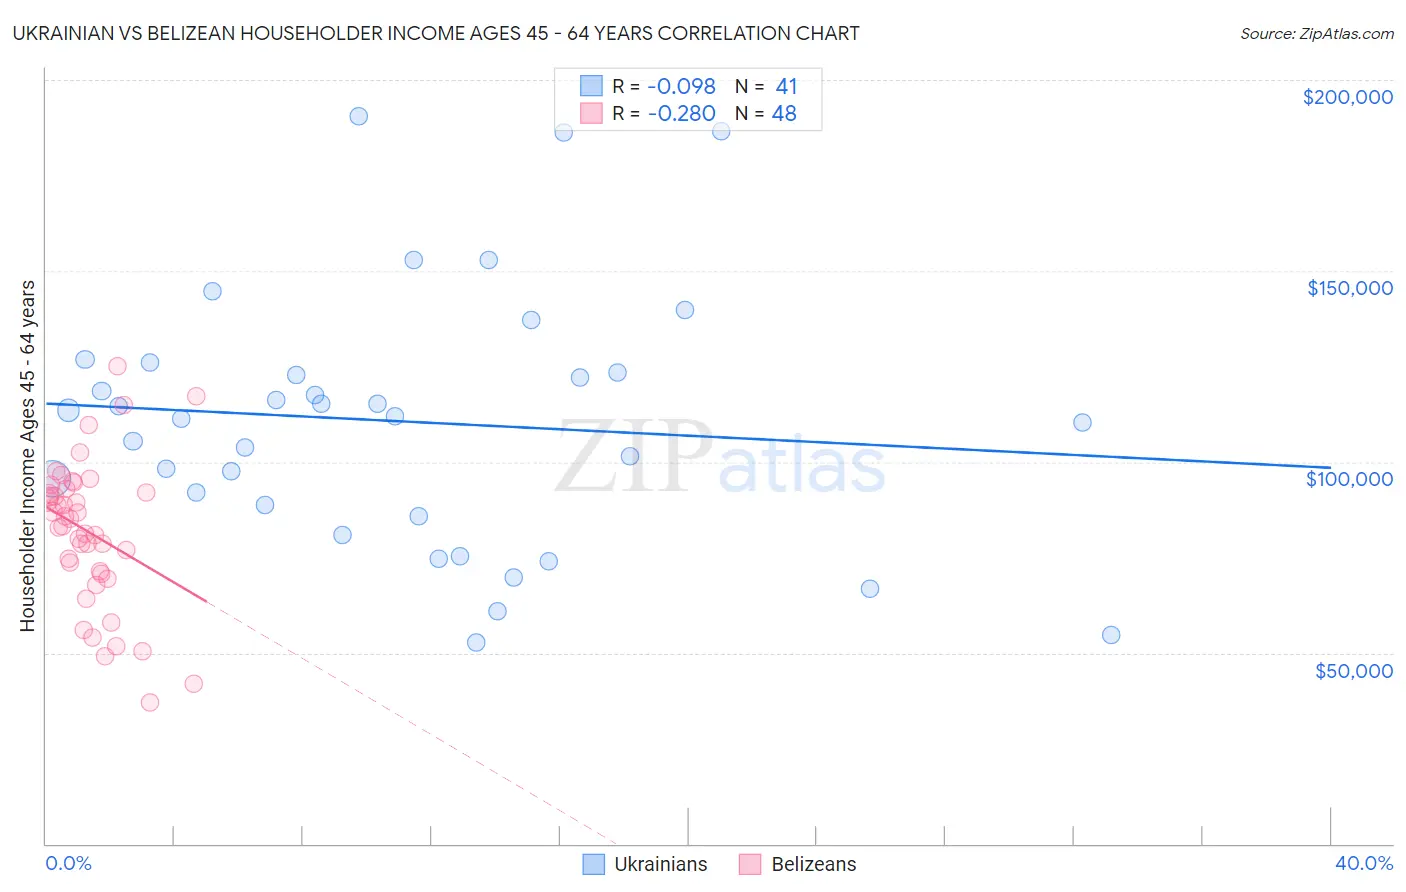 Ukrainian vs Belizean Householder Income Ages 45 - 64 years